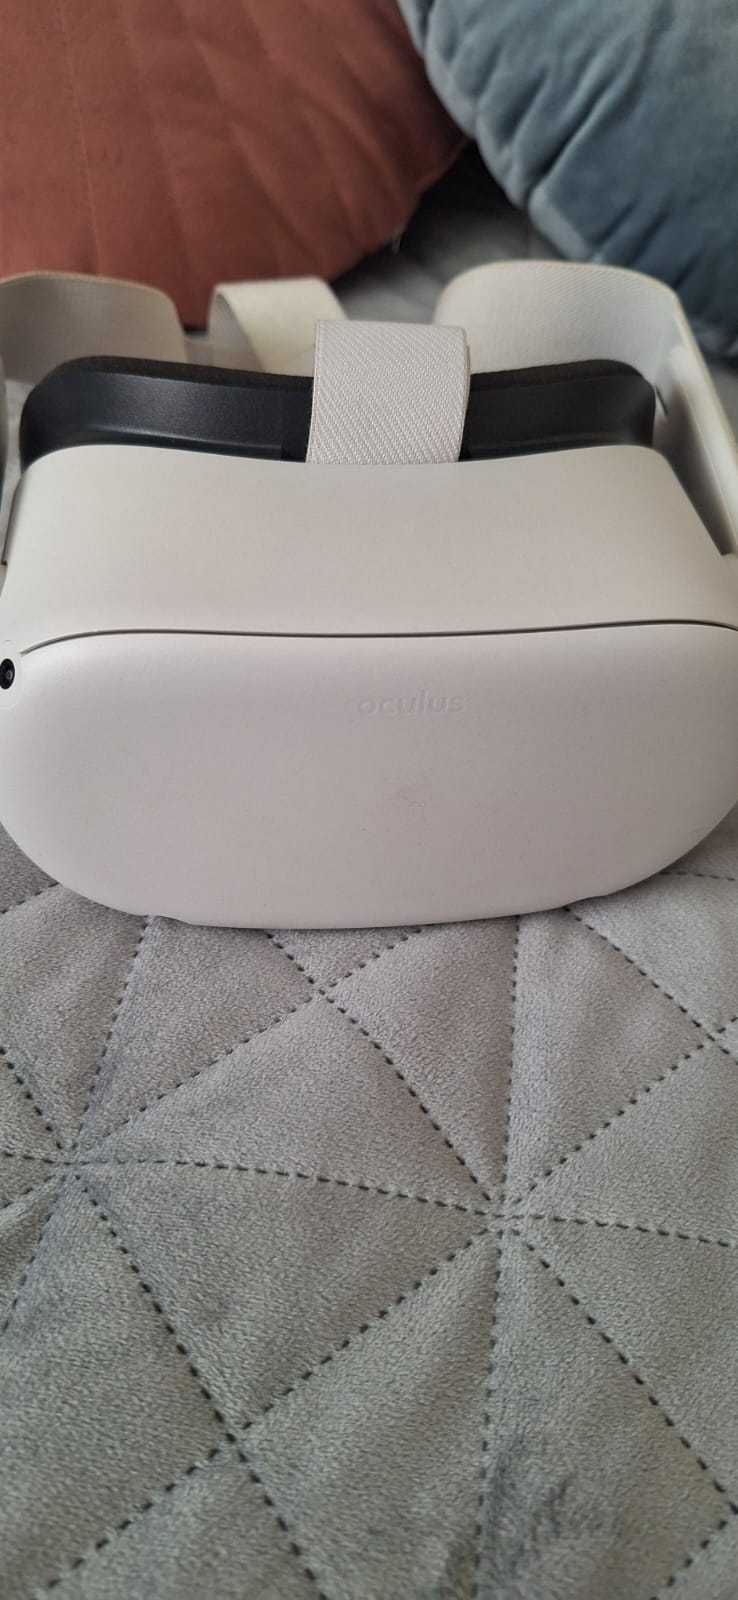 Vand ochelari VR oculus quest 2